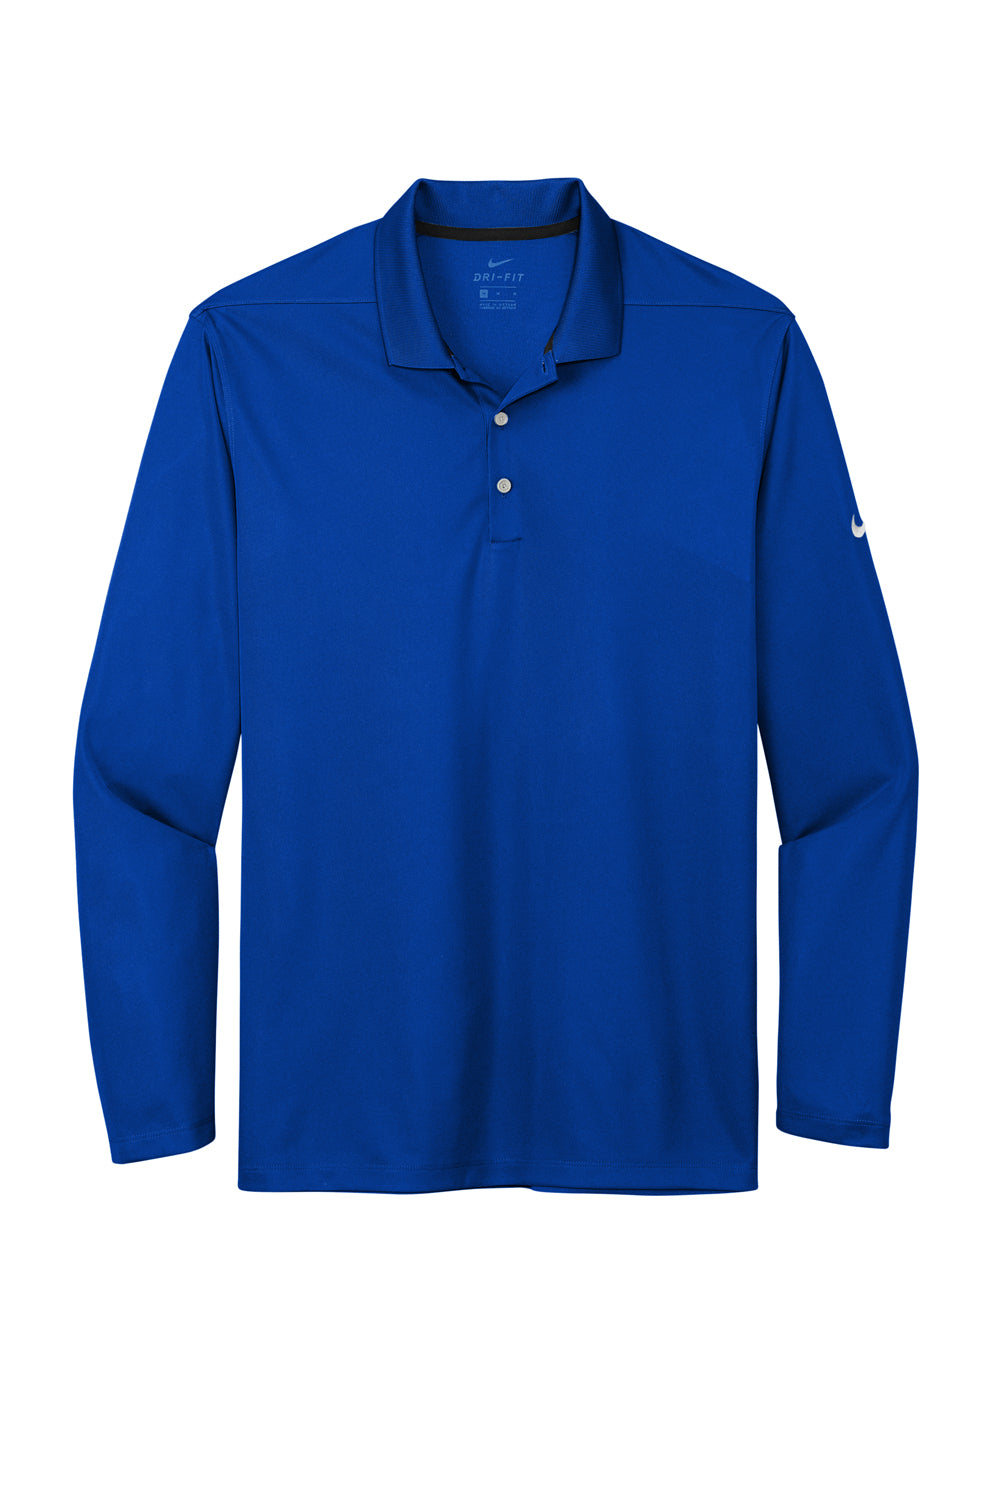 Nike NKDC2104 Mens Dri-Fit Moisture Wicking Micro Pique 2.0 Long Sleeve Polo Shirt Game Royal Blue Flat Front